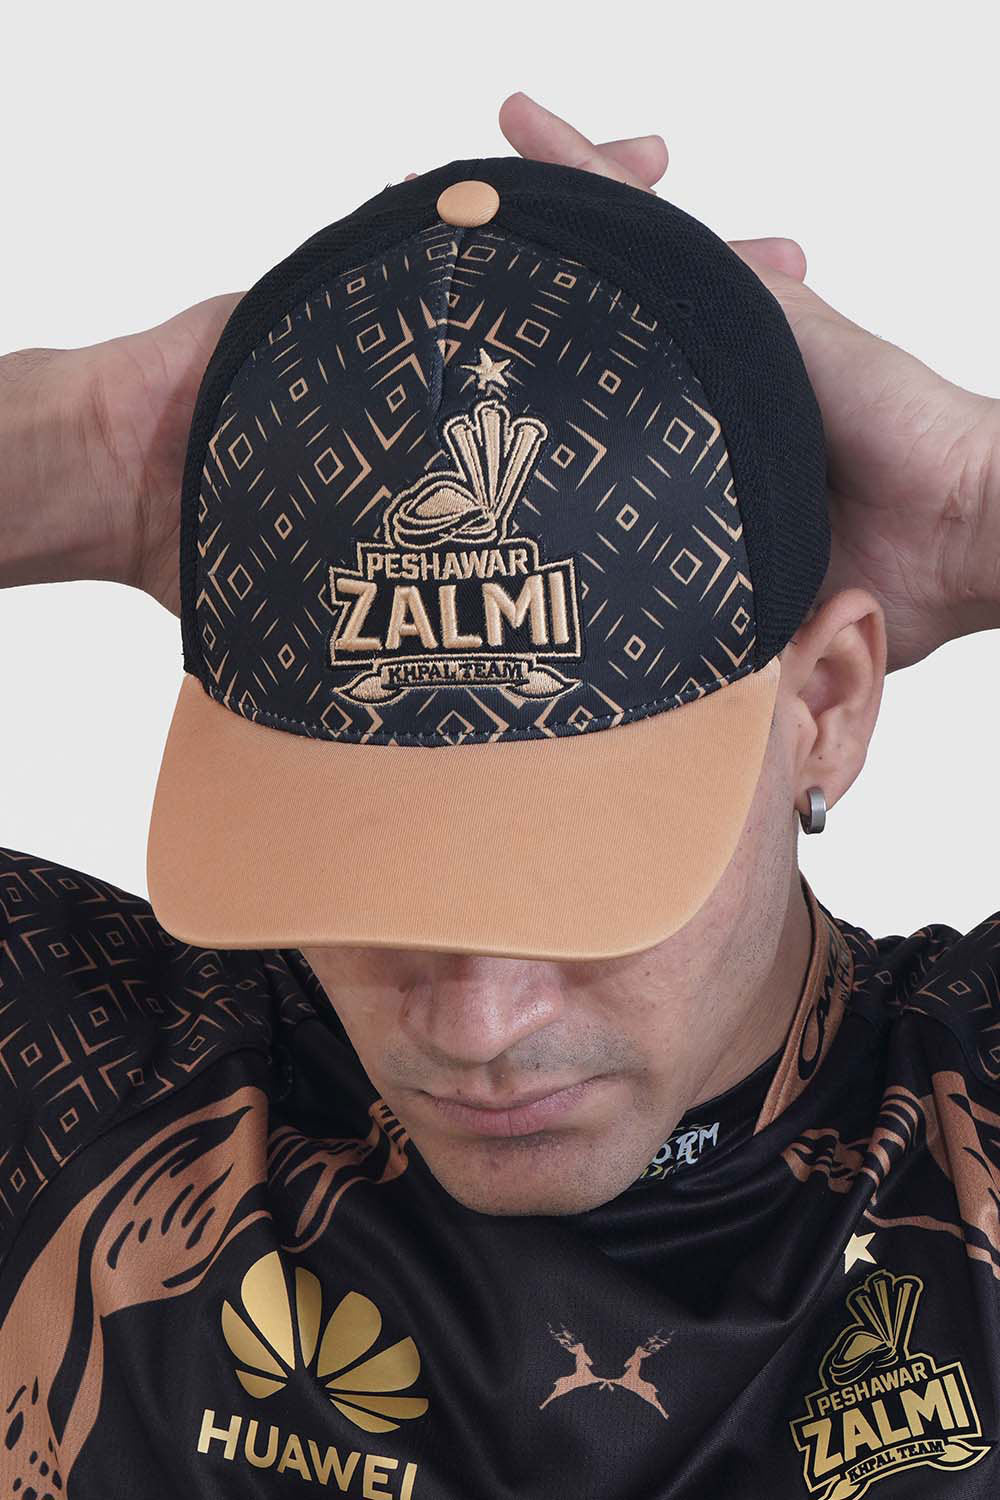 Zalmi Alternate Cap - PSL 8 for Men's Cricket | cricket outfit for men